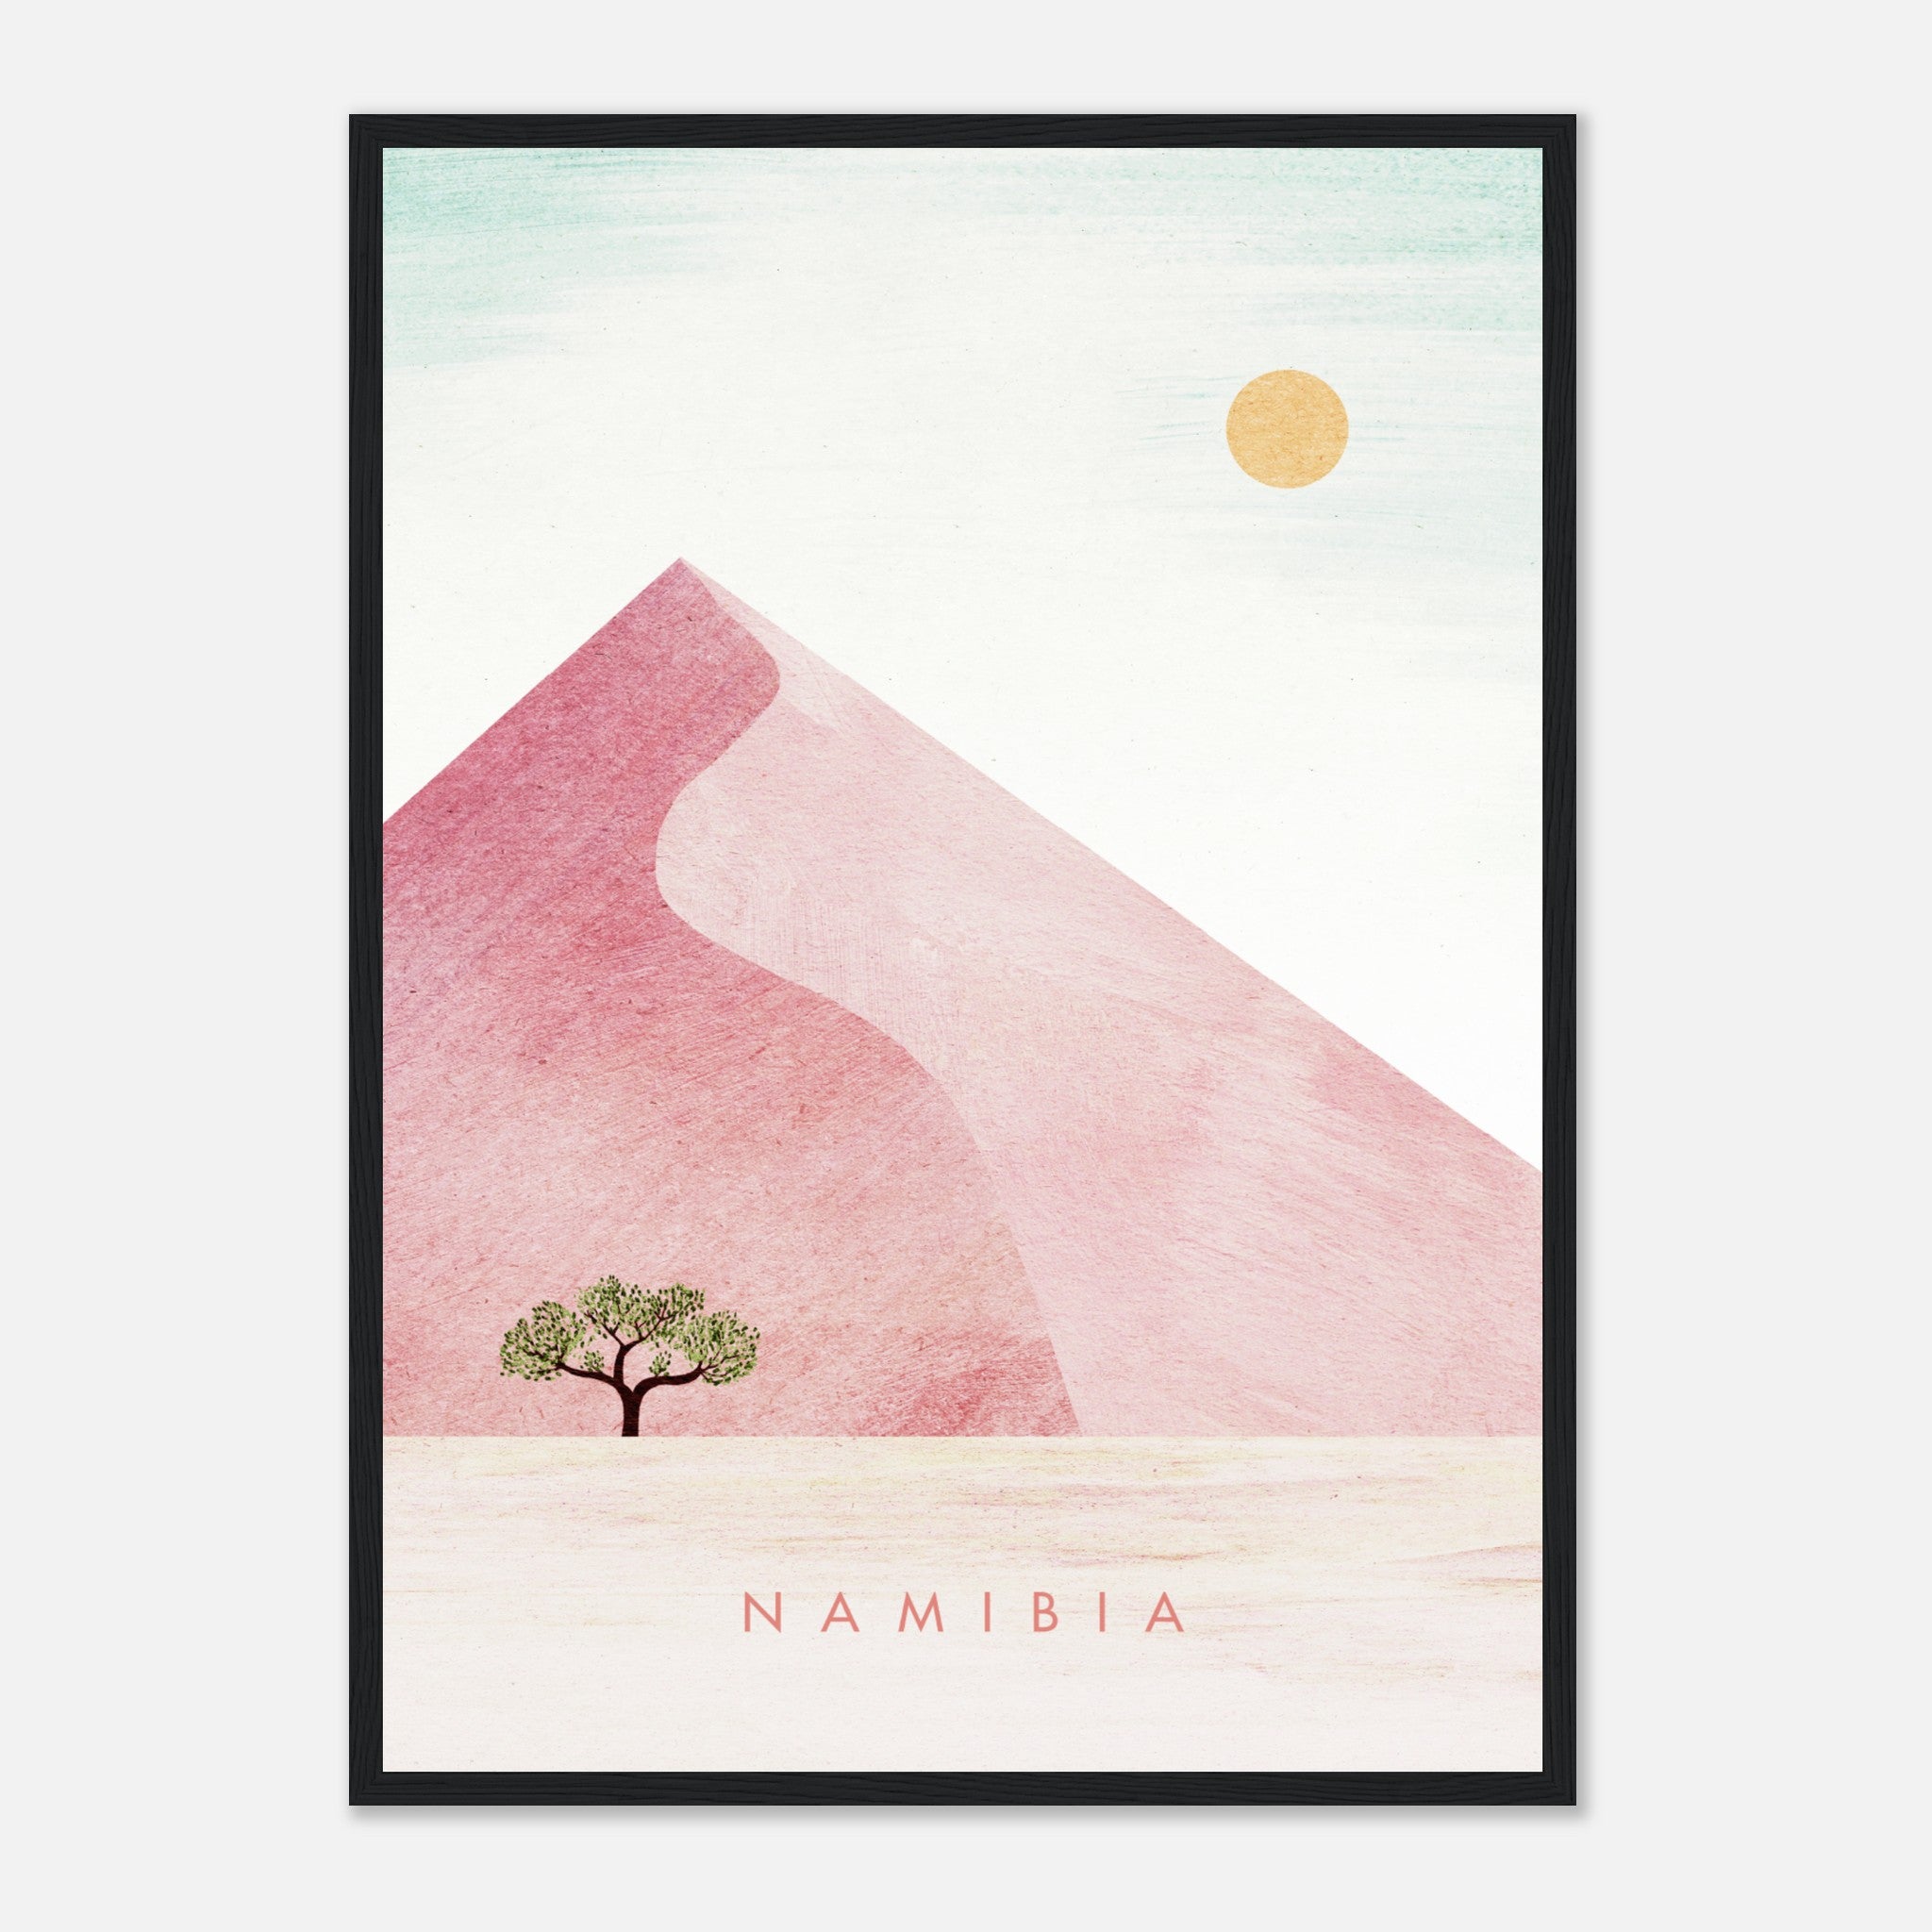 Namibia Poster